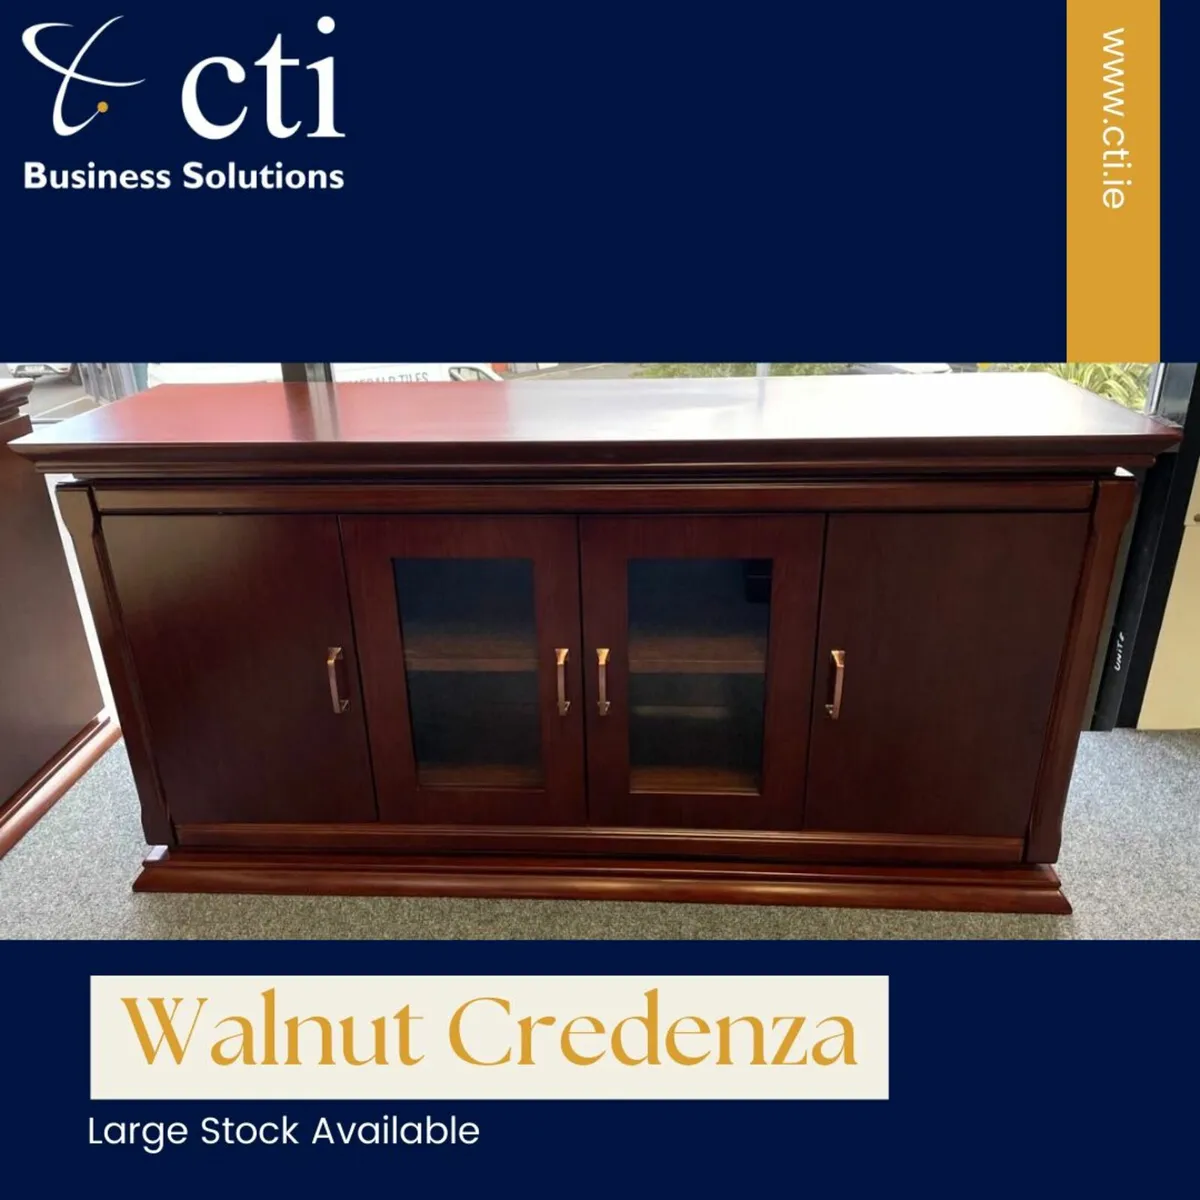 In Stock! Credenza Walnut Storage Units- Brand New